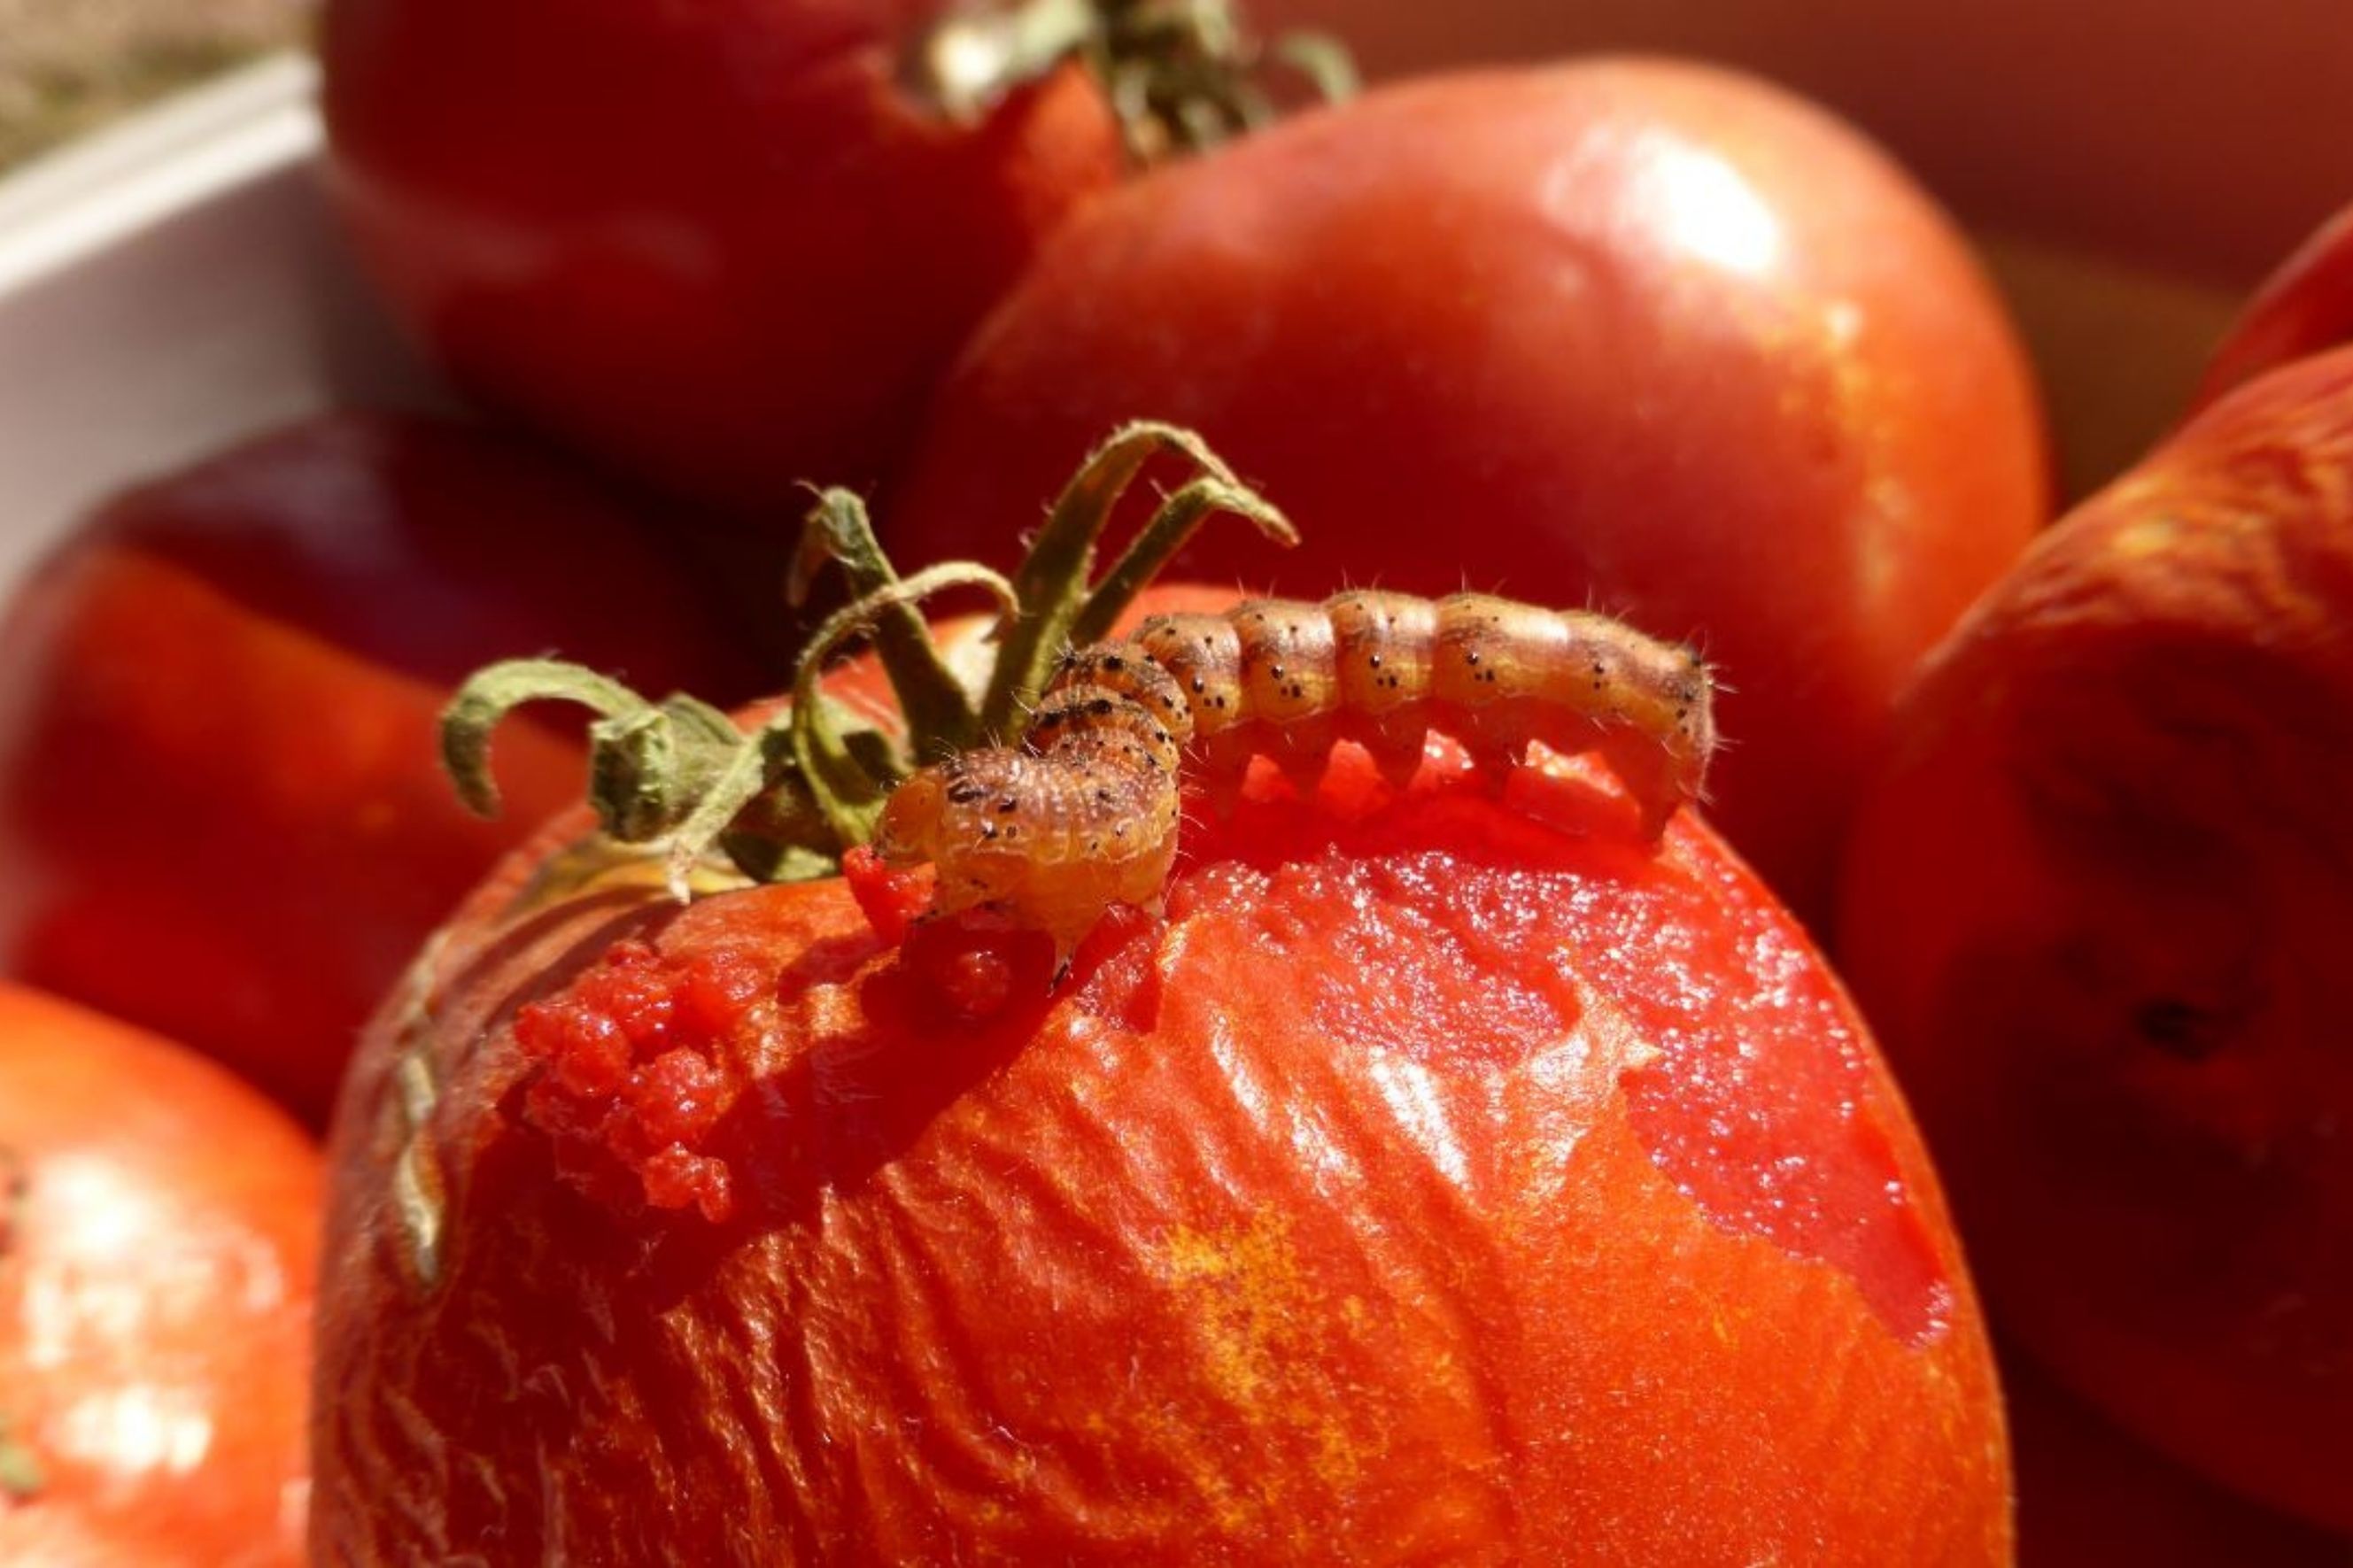 Corn Earworm on Tomato Fruit